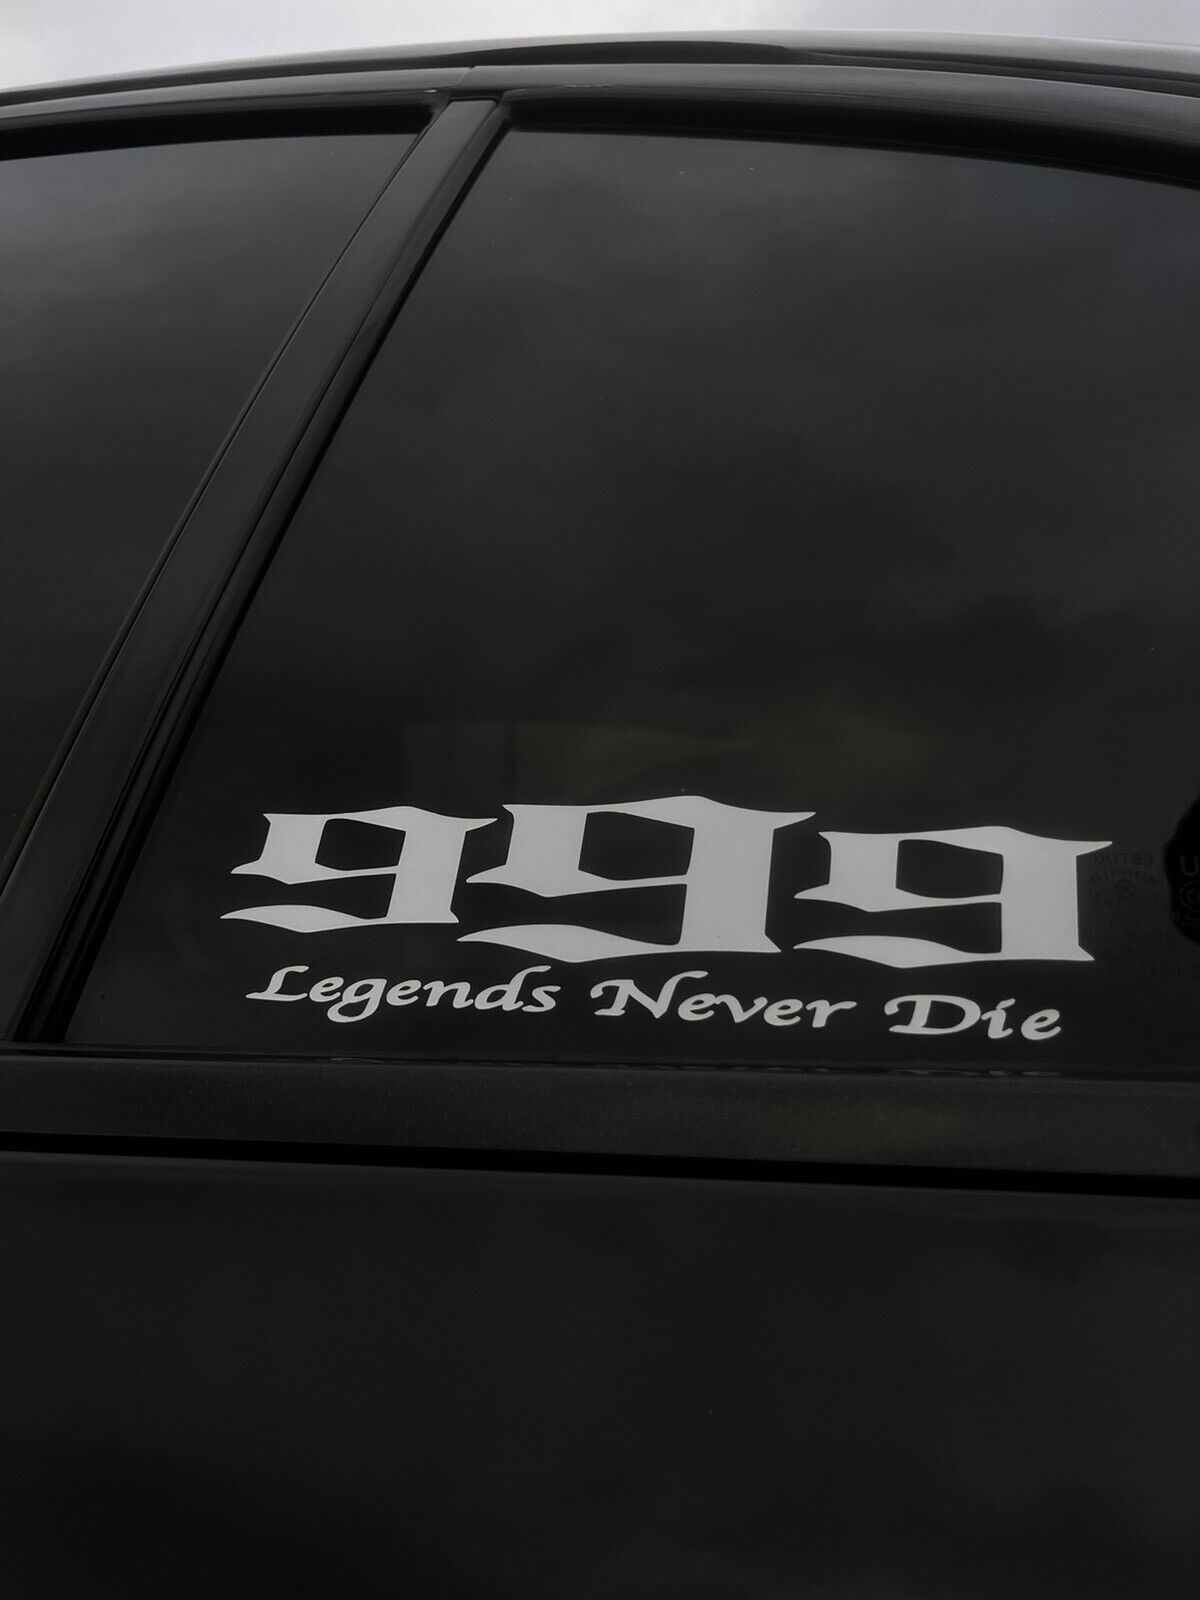 999 Legends Never Die Car Decal/Car Sticker